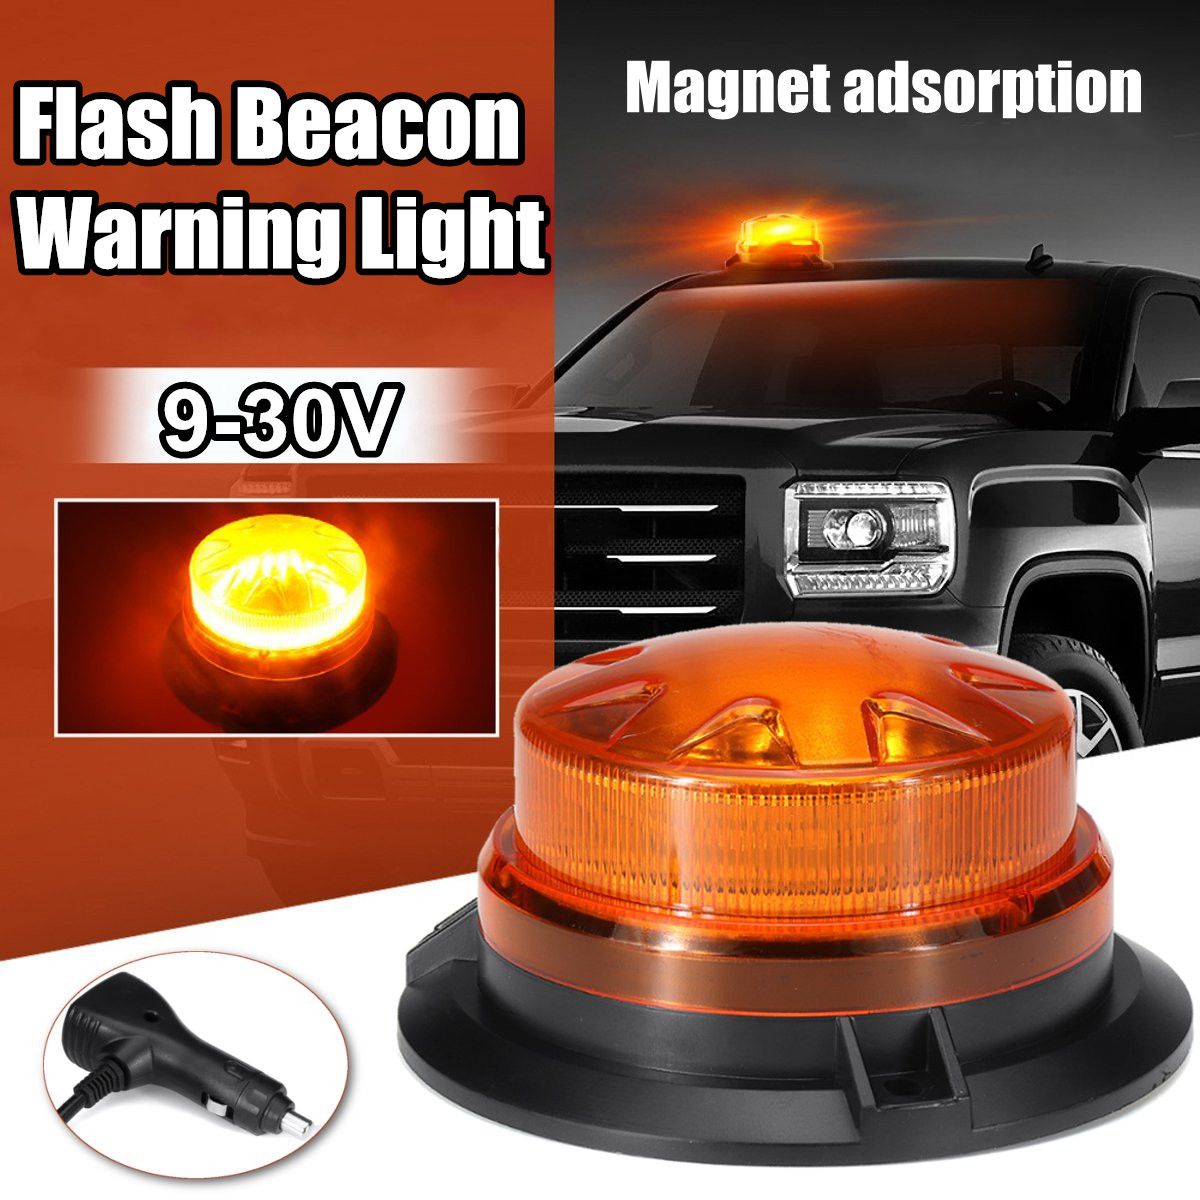 Flashing-Beacon-Warning-Light-360-Degree-Rotating-Roof-Strobe-Lamp-Yellow-Magnet-Adsorption-for-12V2-1660279